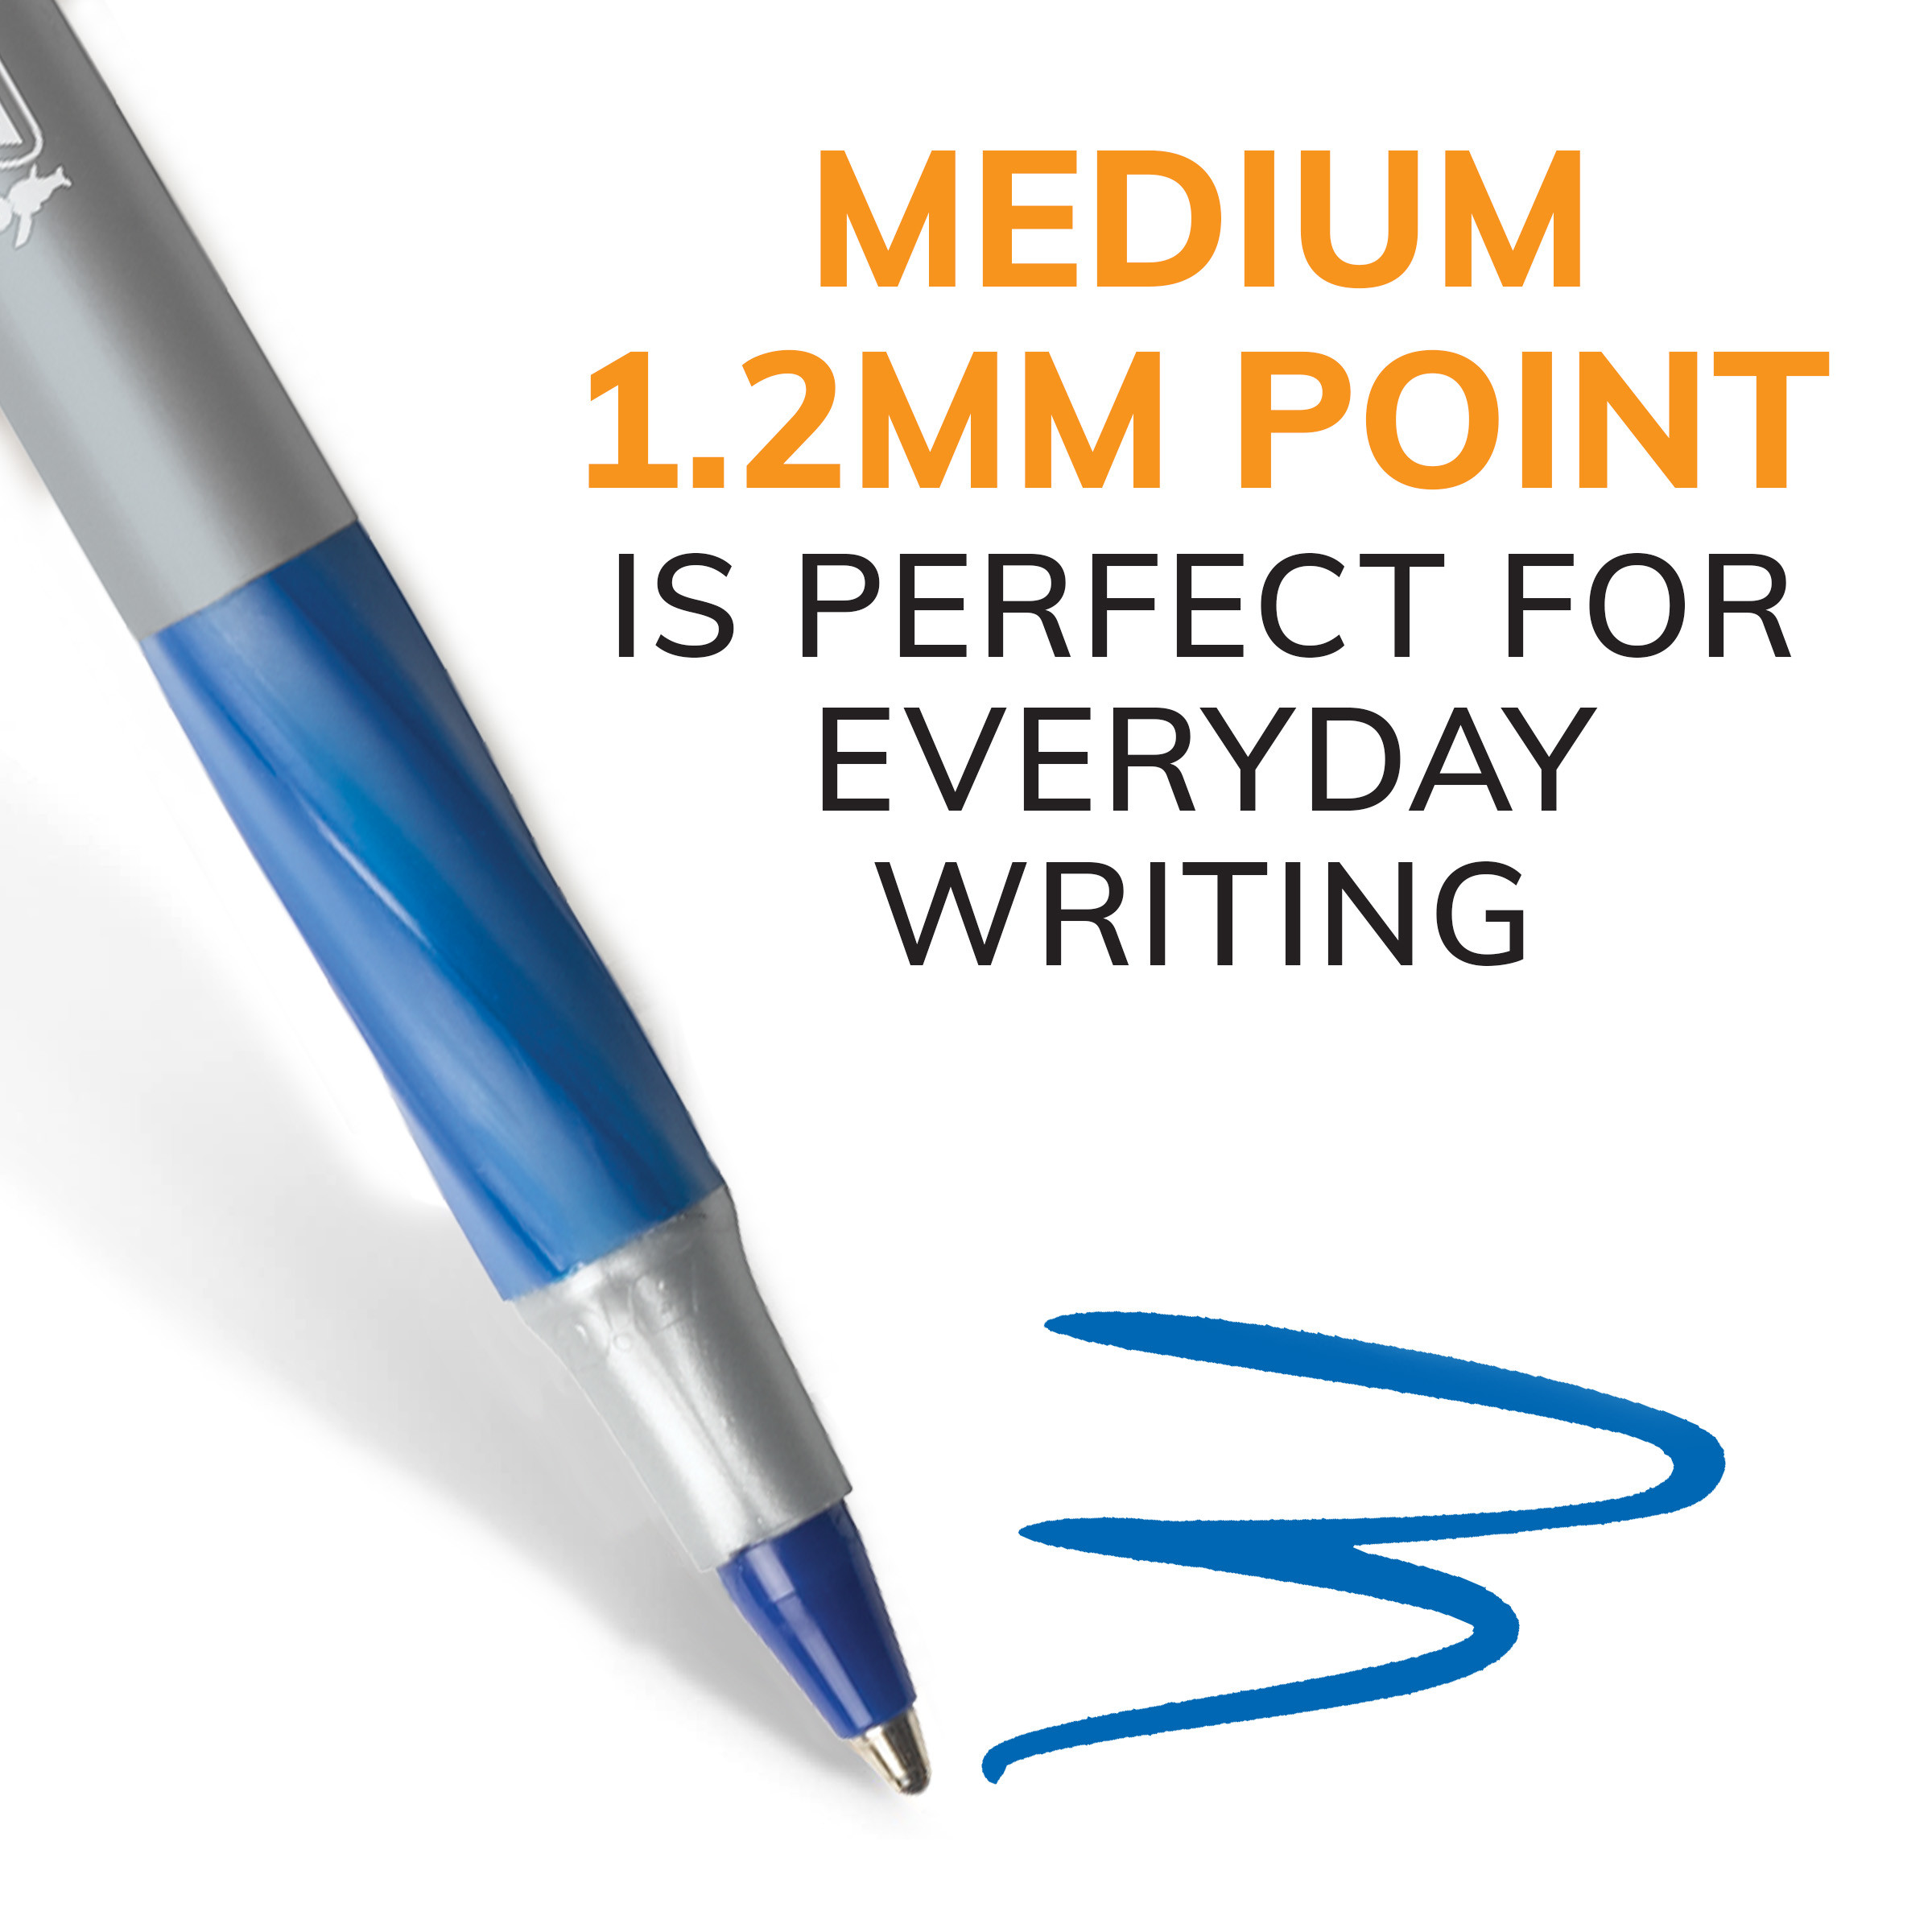 BIC Round Stic Grip Xtra Comfort Ballpoint Pen, Classic Medium Point (1.2 mm), Box of 24 Blue Pens - image 6 of 14